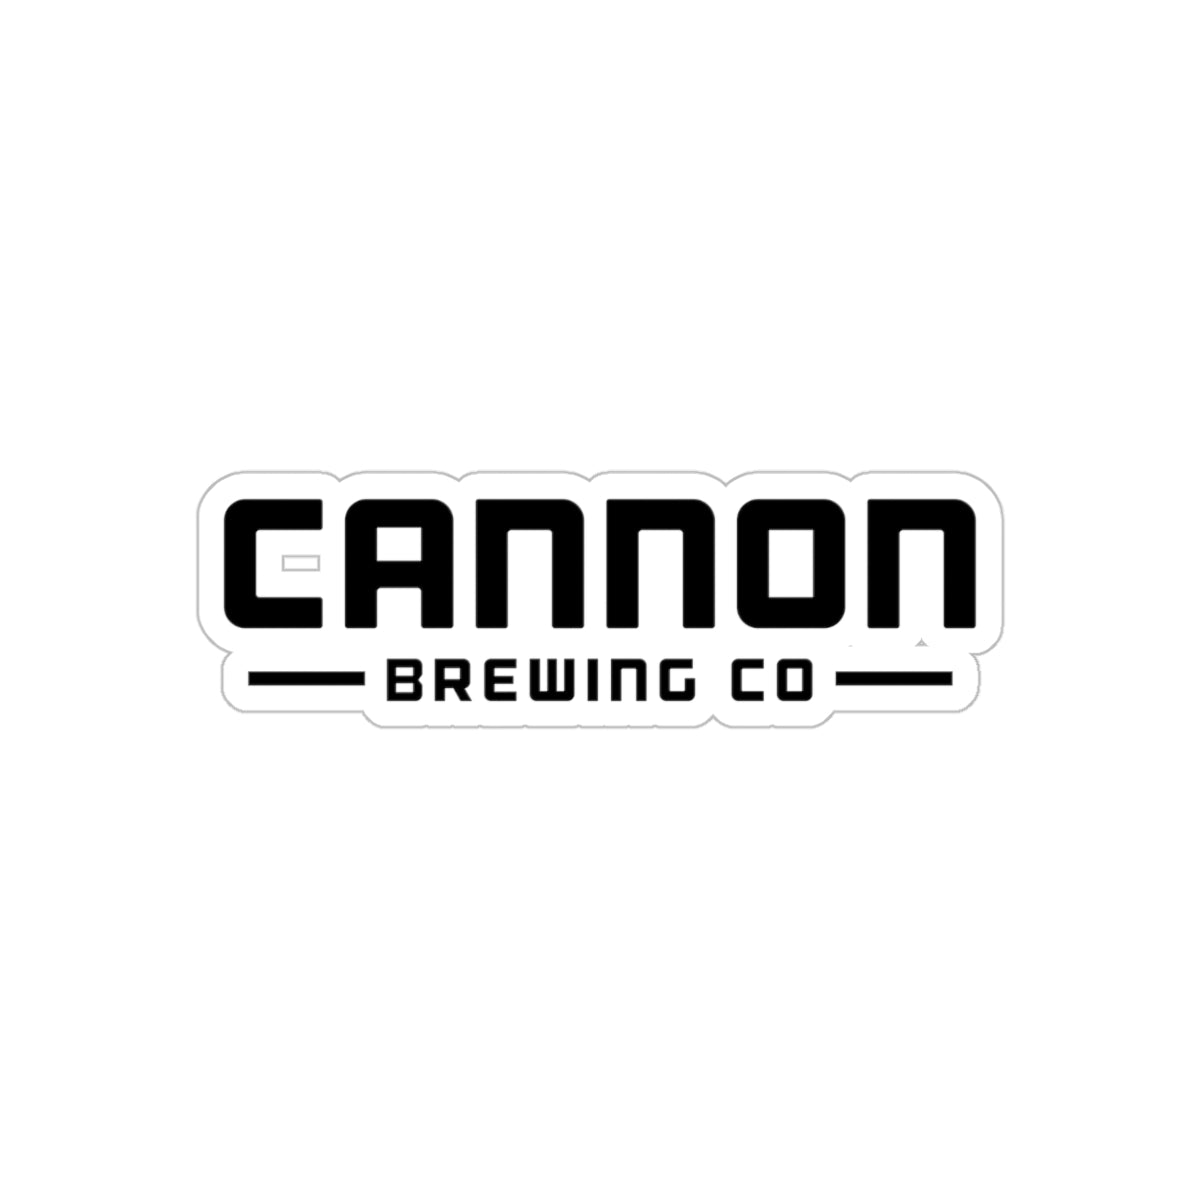 Cannon Brewing Co Transparent Outdoor Sticker, Die-Cut, 1pcs